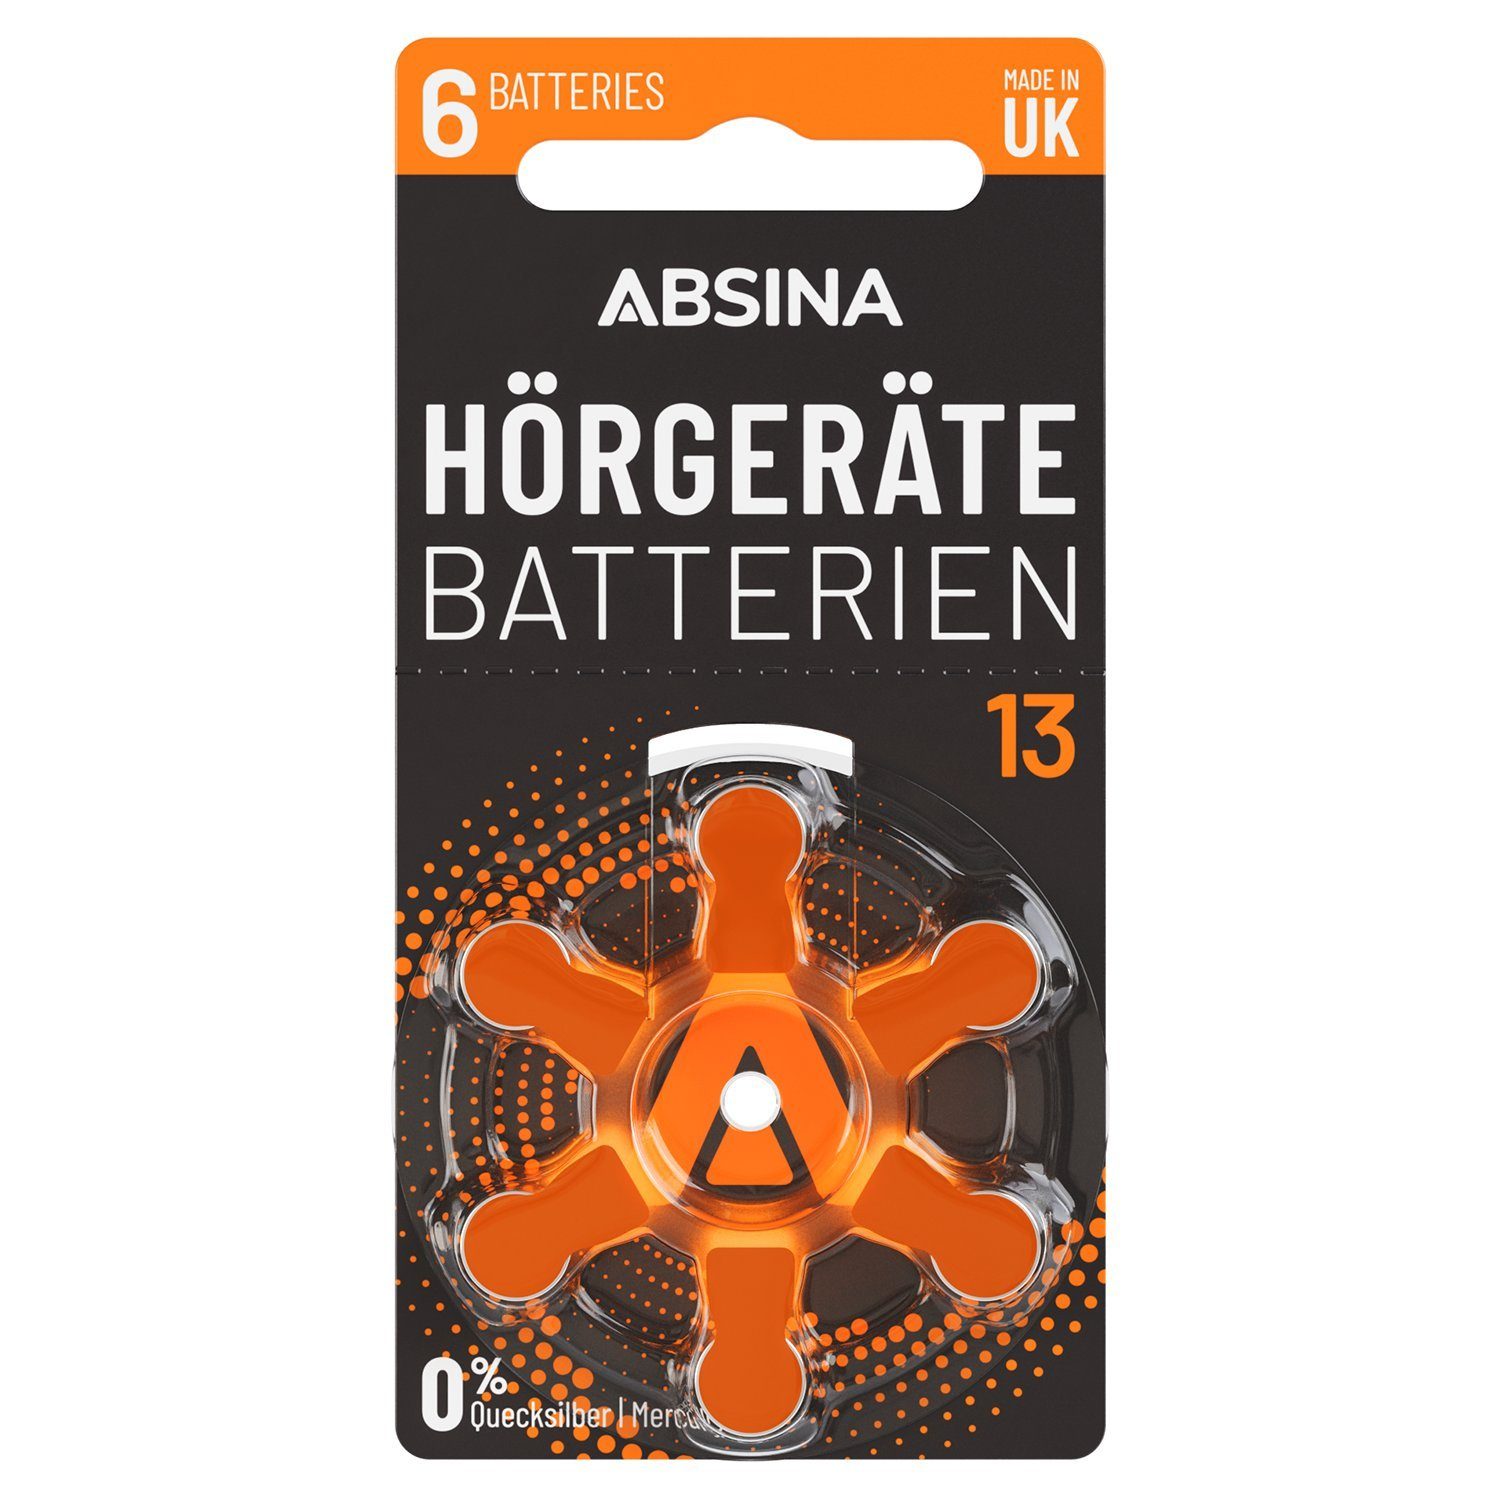 ABSINA 6x Hörgerätebatterien 13 - Knopfzelle, orange PR48 St) Batterien Hörgeräte P13 (1 ZL2 13